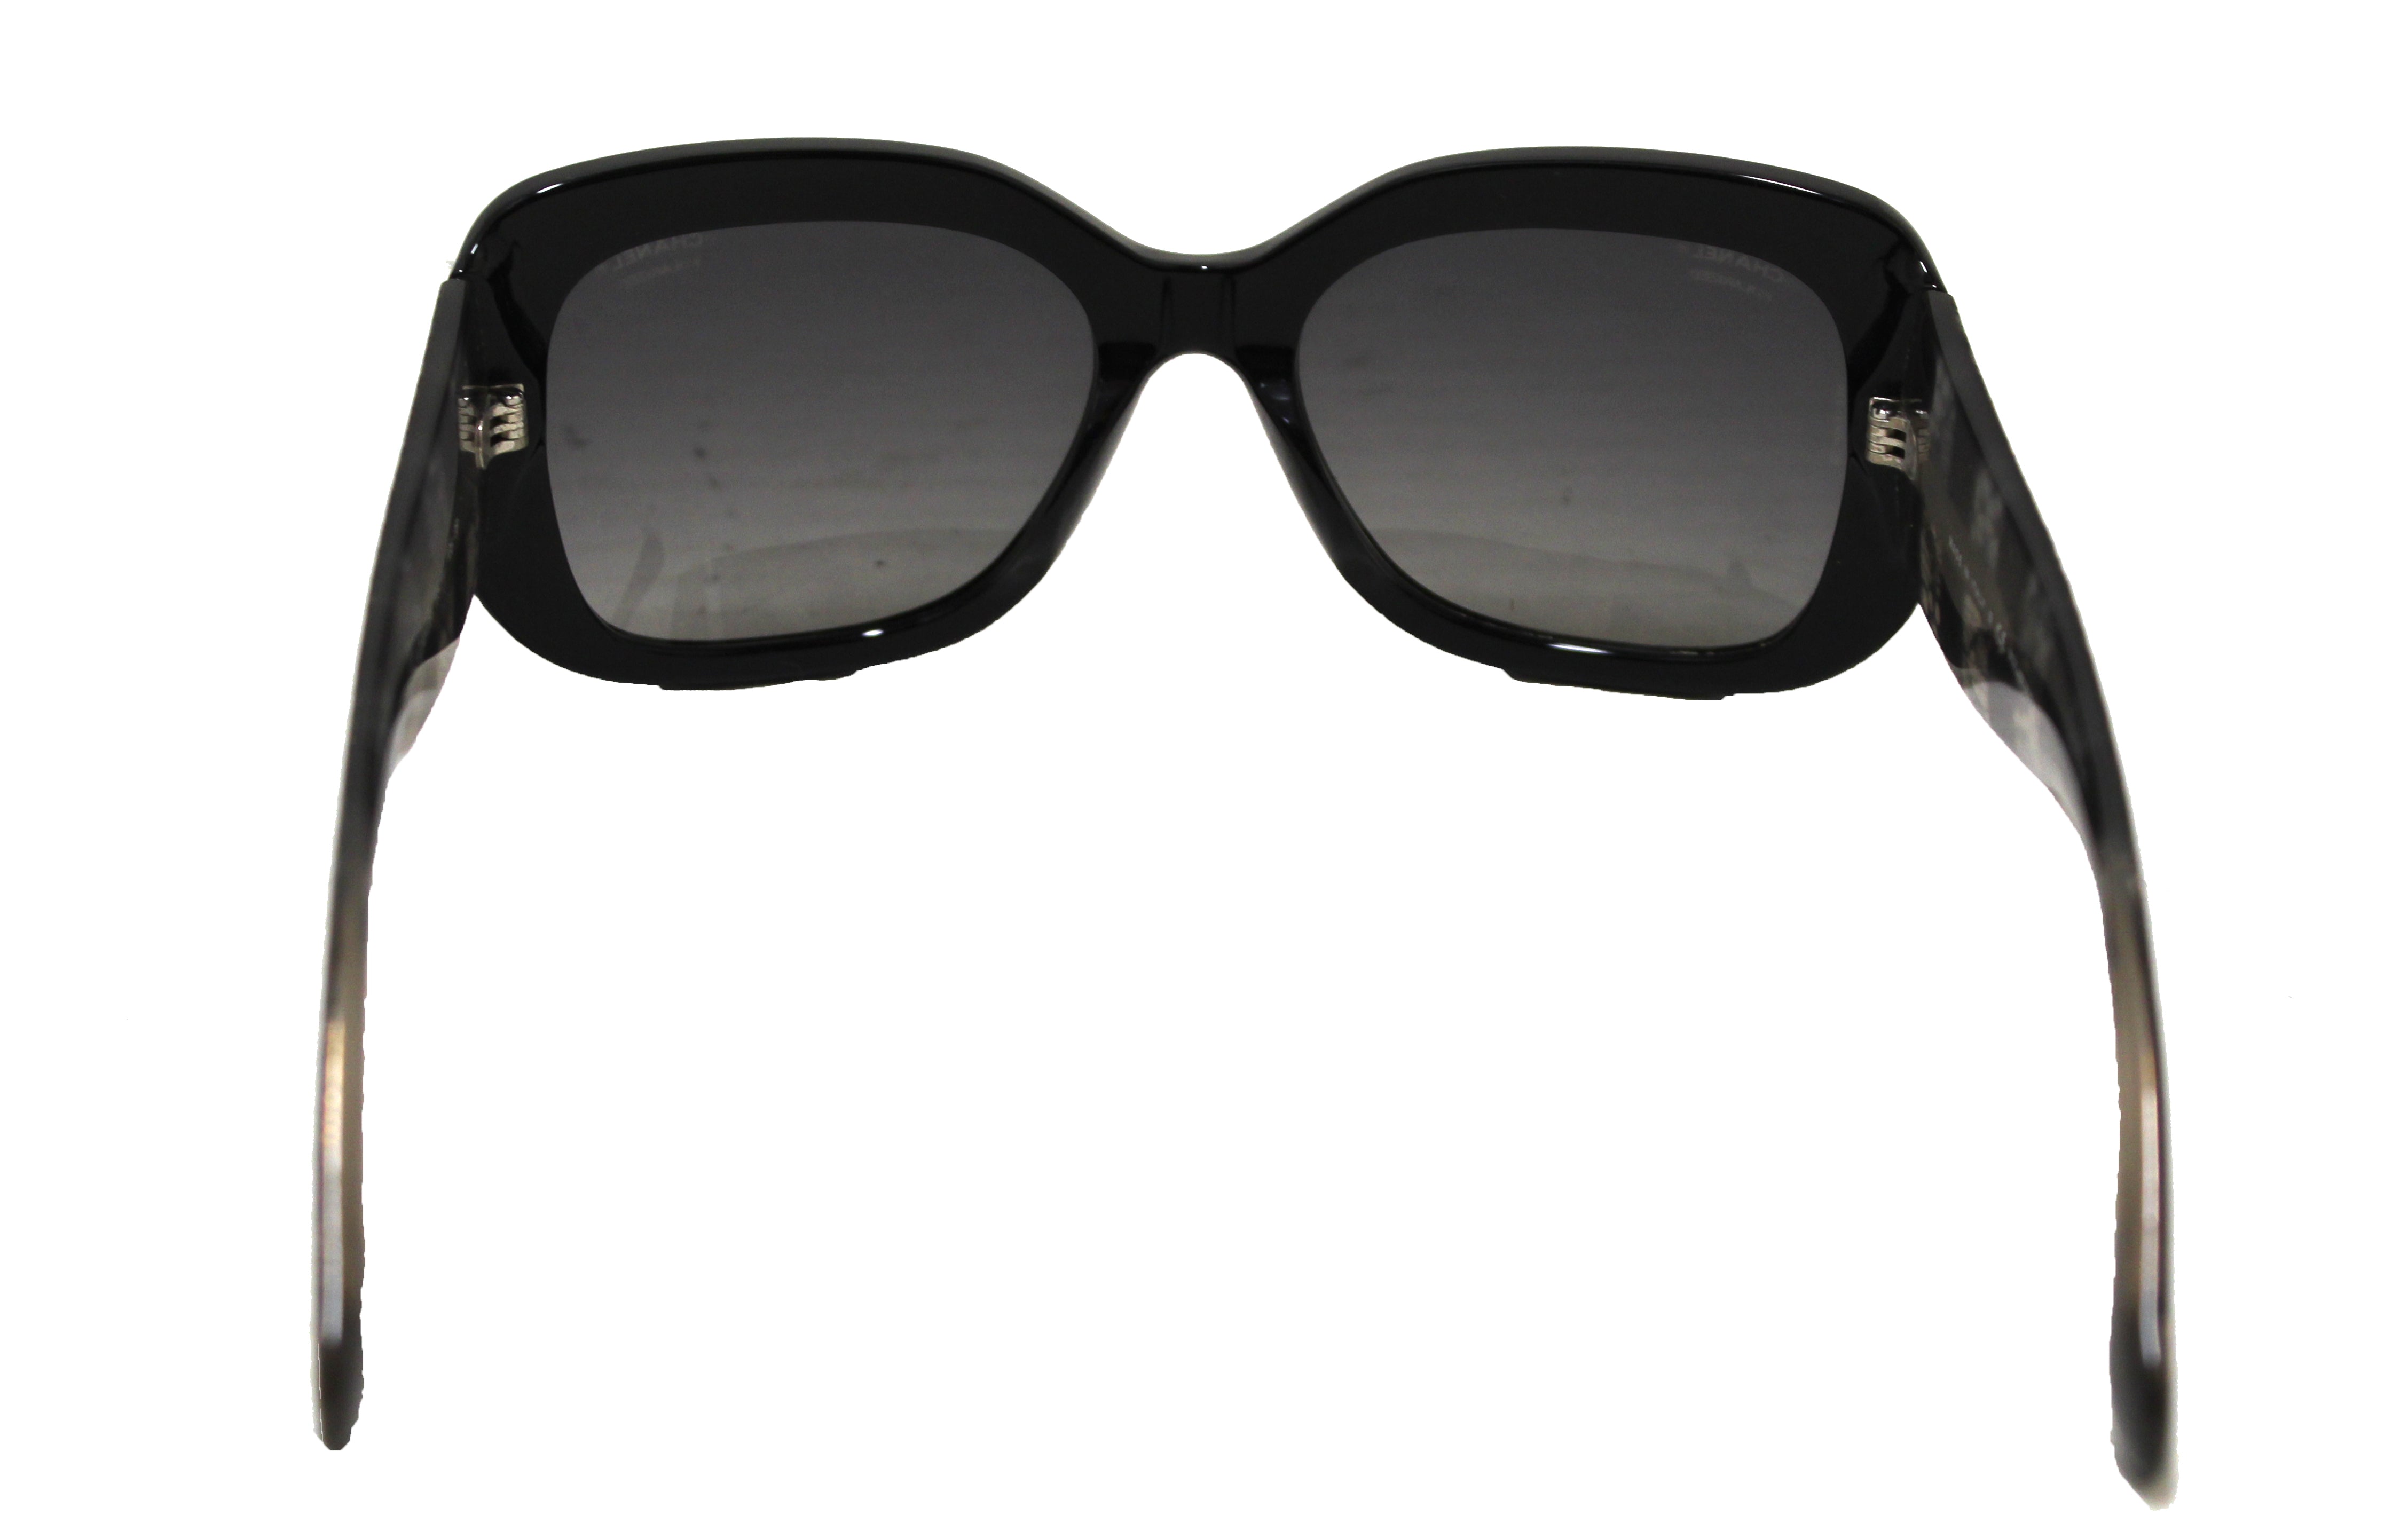 black white chanel sunglasses authentic